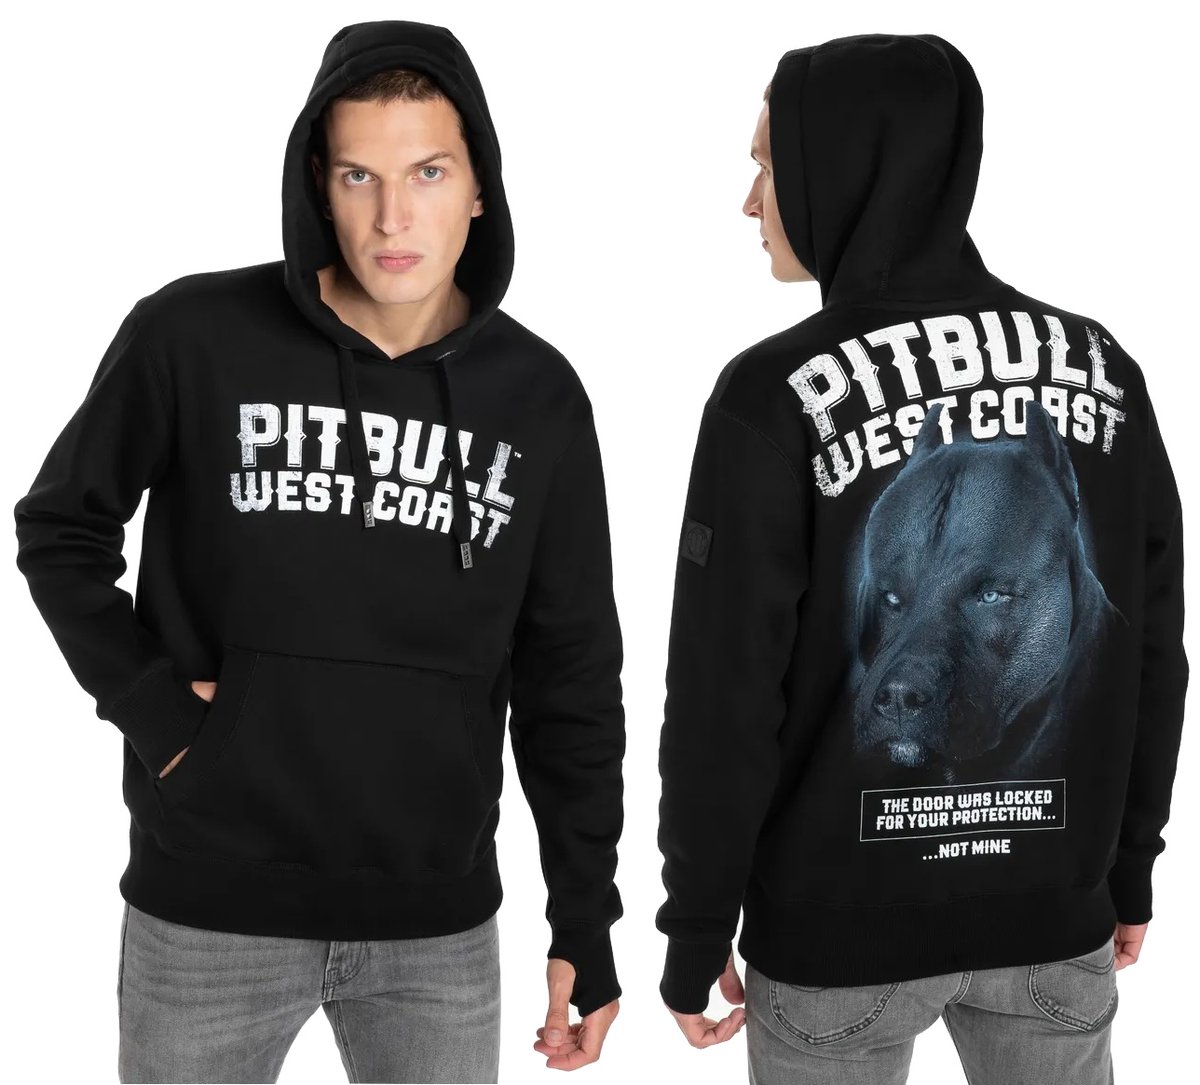 Pit Bull West Coast Kapuzensweat Black Dog bei rascal.de rascal.de/rascal/index.p… 

#pitbull #pitbullwestcoast #pitbulls #streetwearshop #fightwear #ufc #streetwear #streetwearstore #streetwearstyle